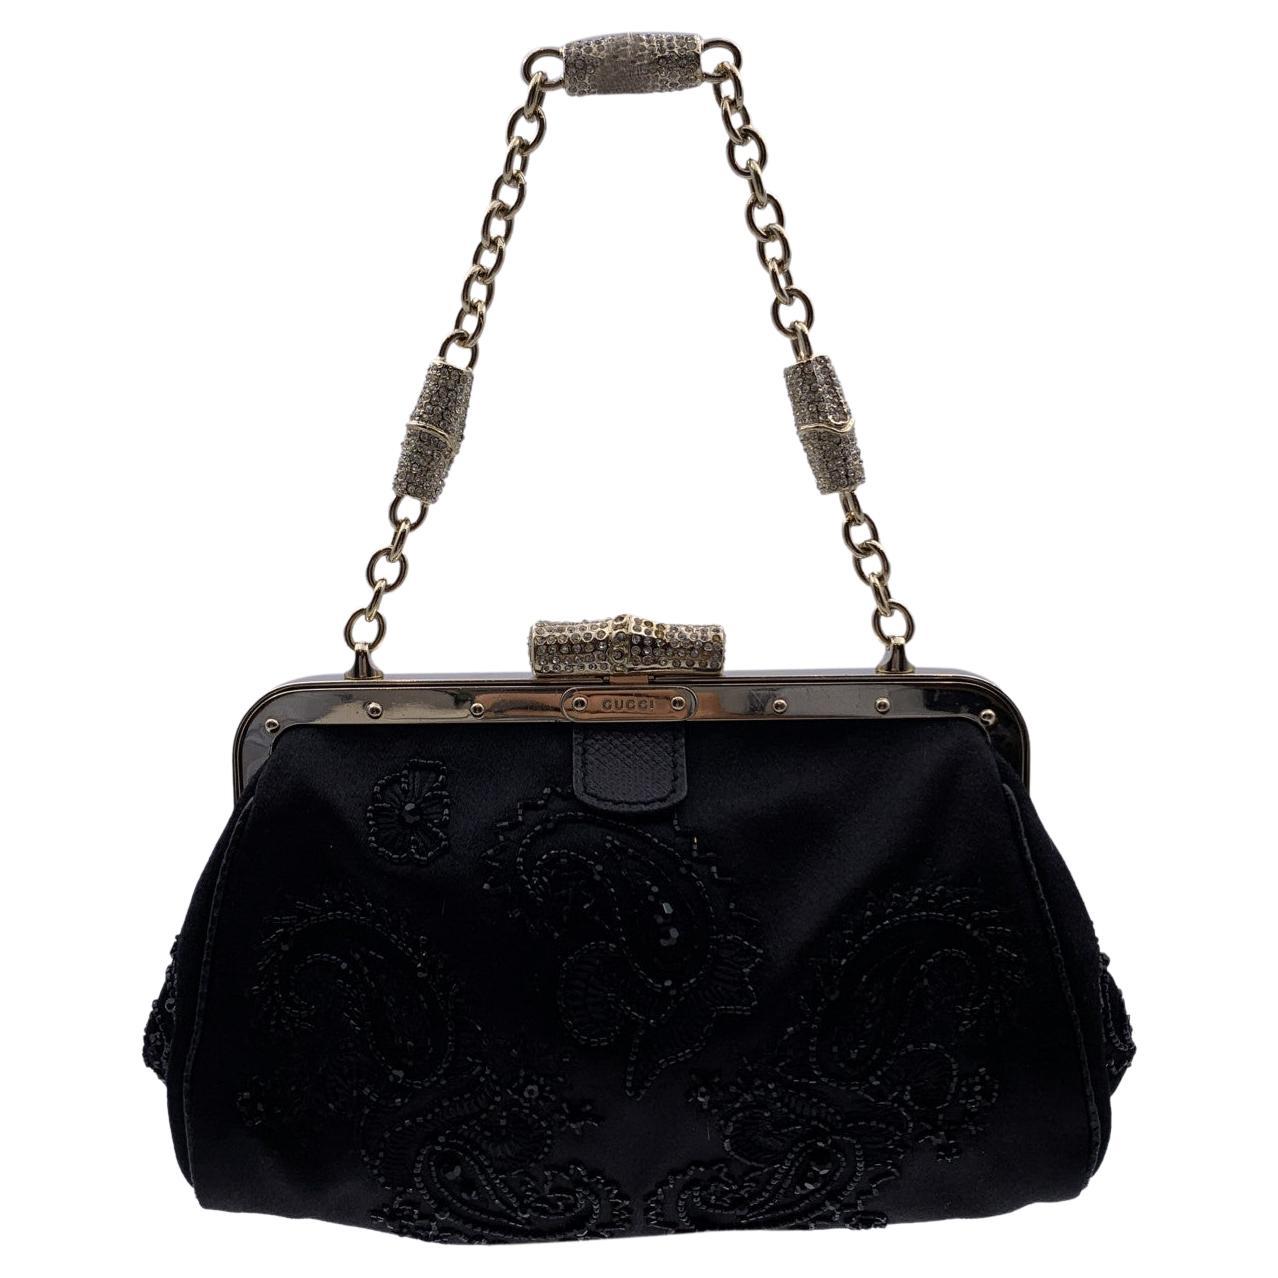 Gucci Black Satin Embellished Beaded Small Handbag Evening Bag